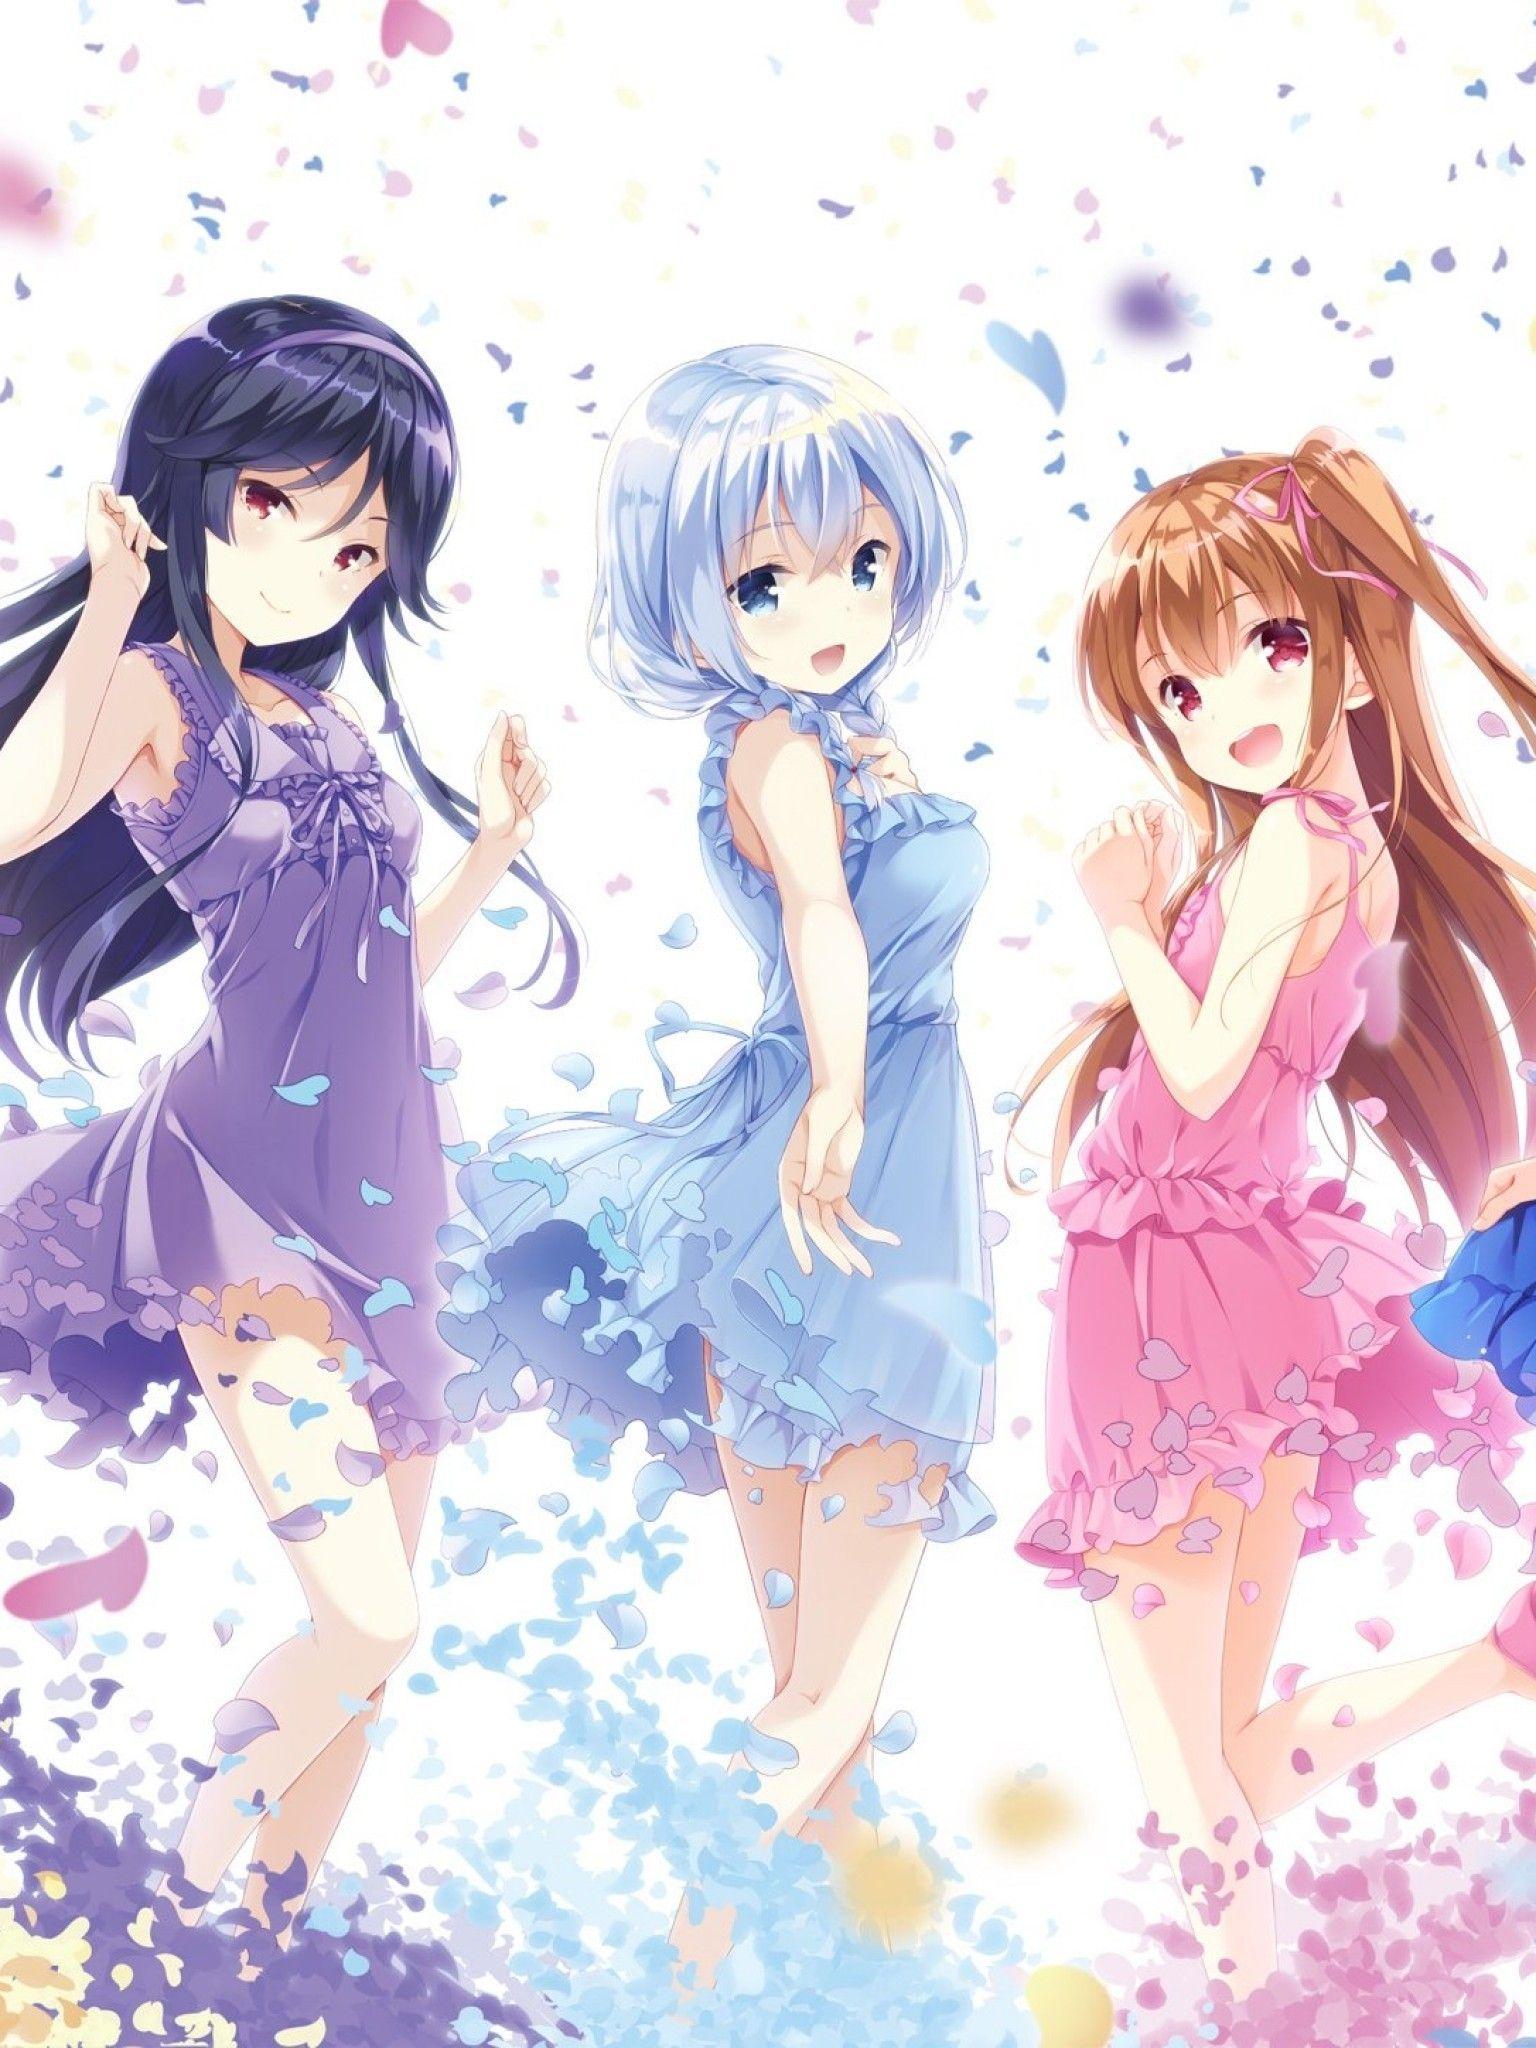 Anime Girl Best Friends Wallpapers - Wallpaper Cave